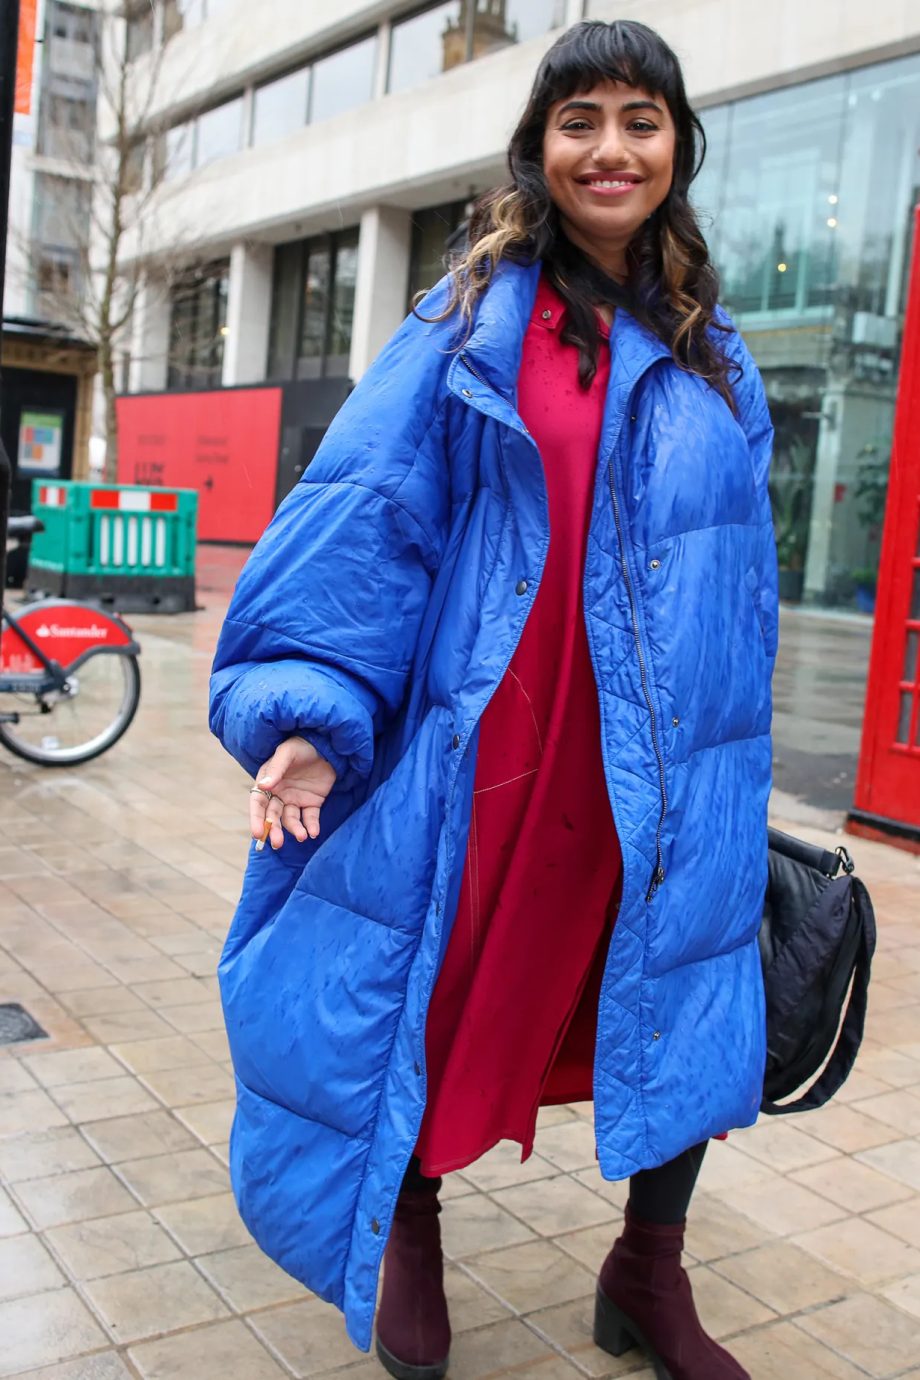 london-calling-regenmode-inspiratie-rechtstreeks-vanuit-london-fashion-week-206152